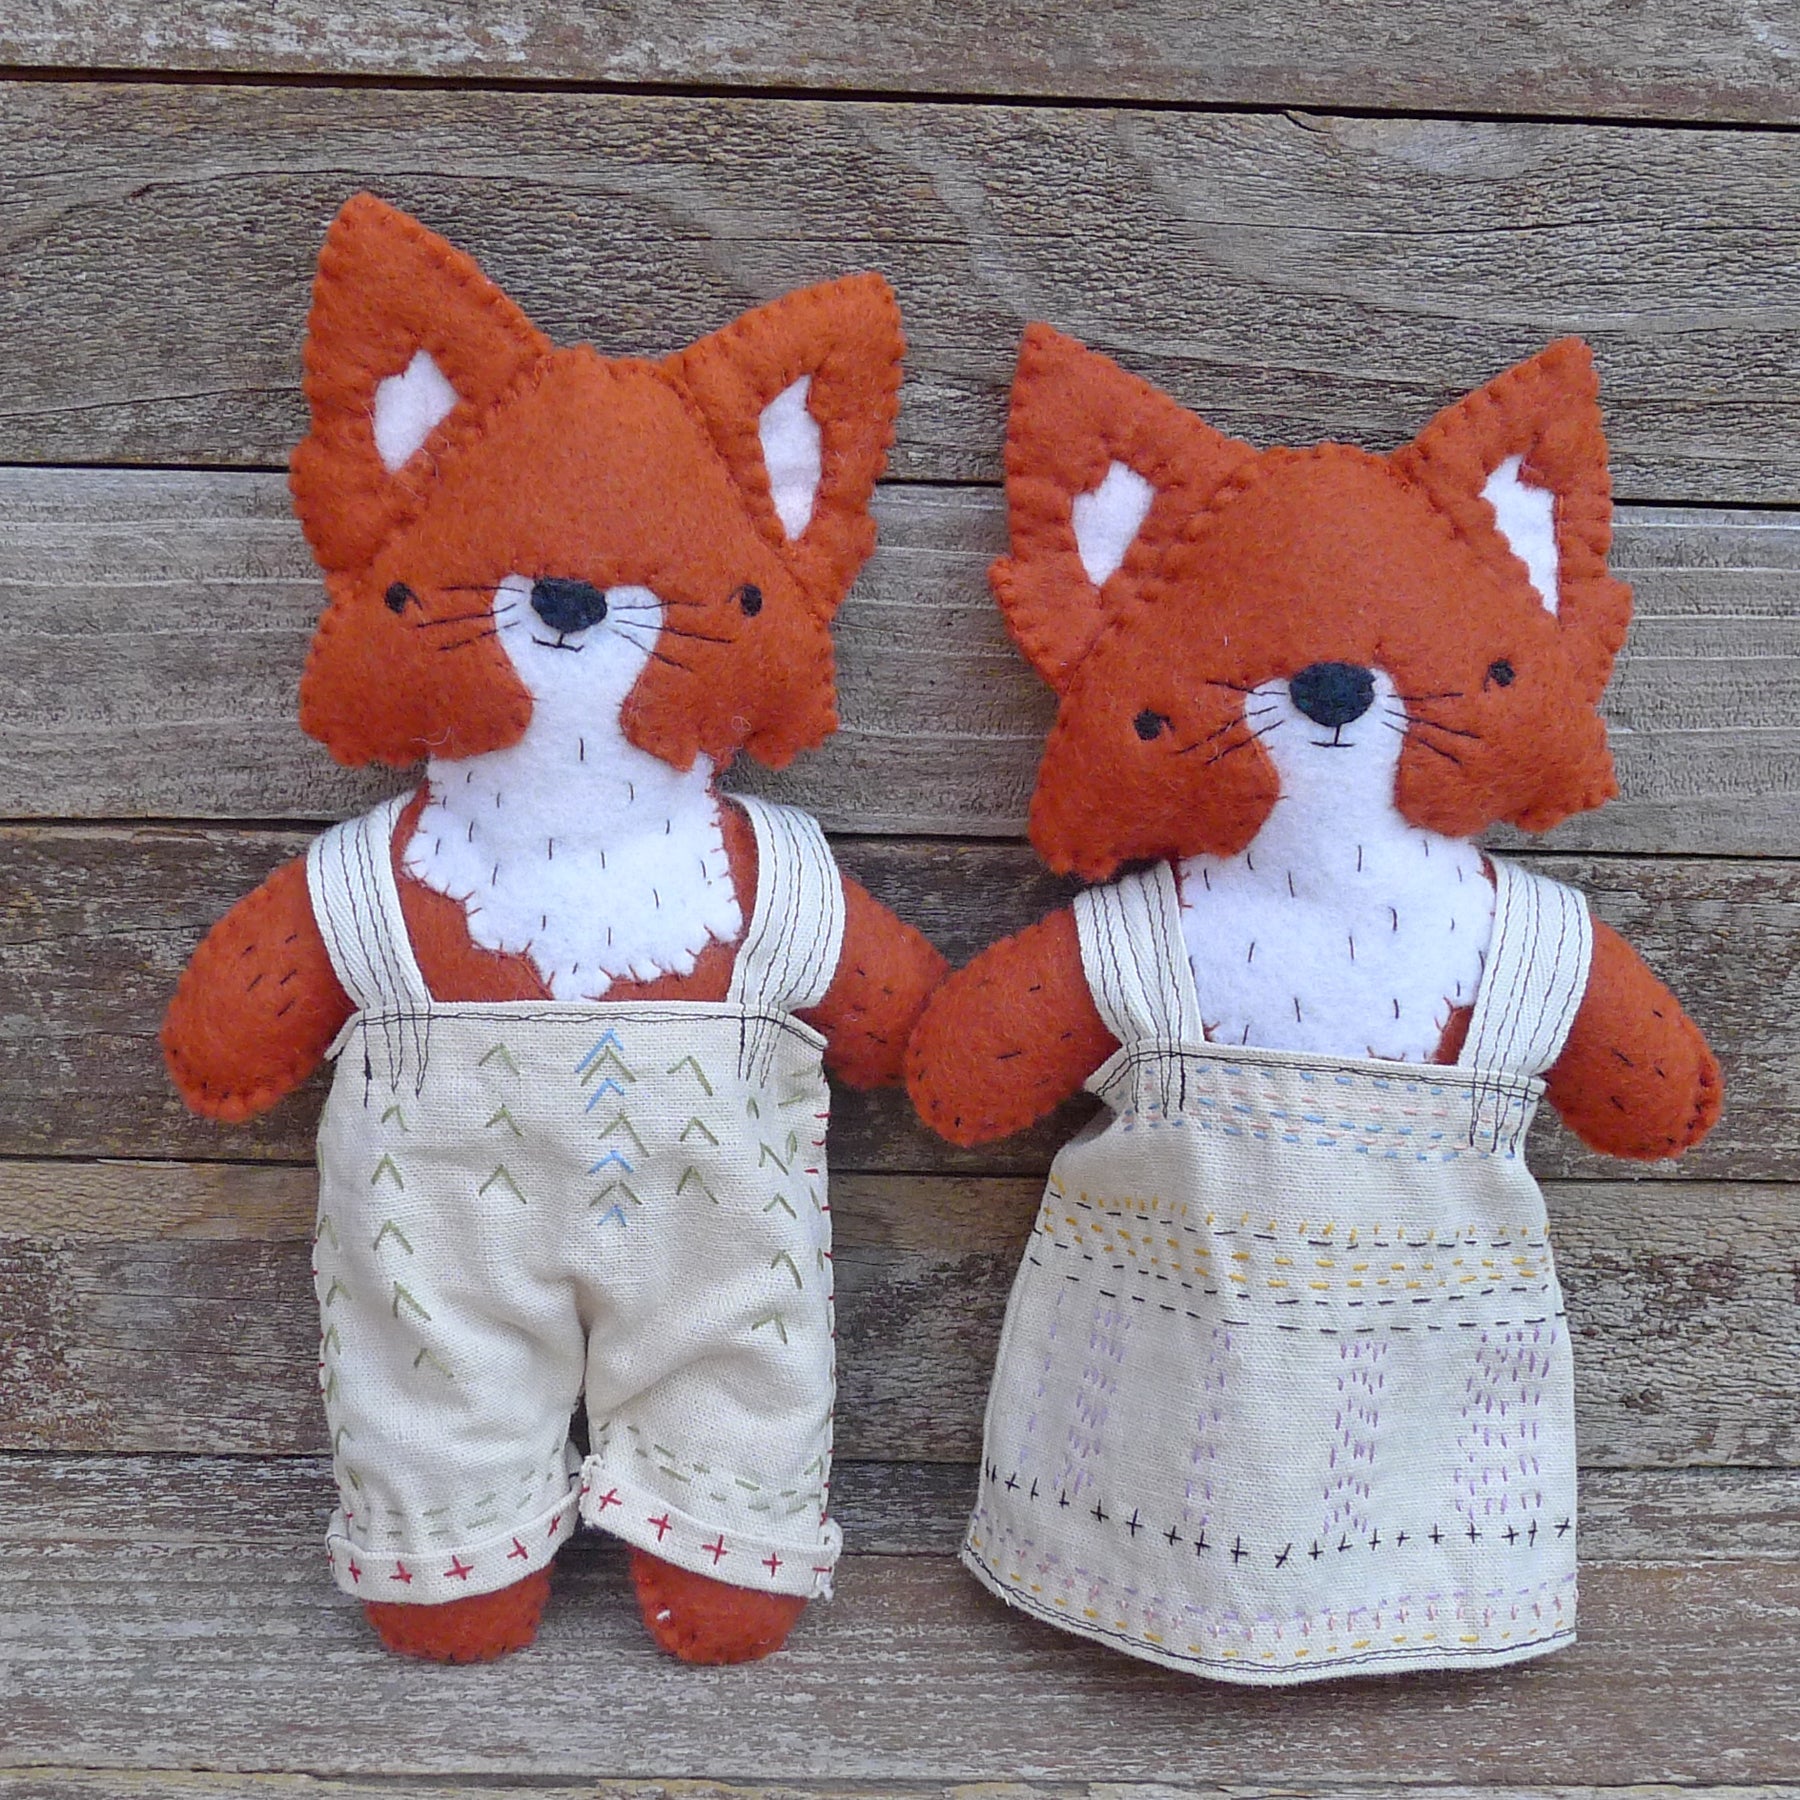 Felt Animal Kit Charlotte fox, Felix fox handmade gift holiday gift fun  craft kit story telling doll making unique stuffed animal